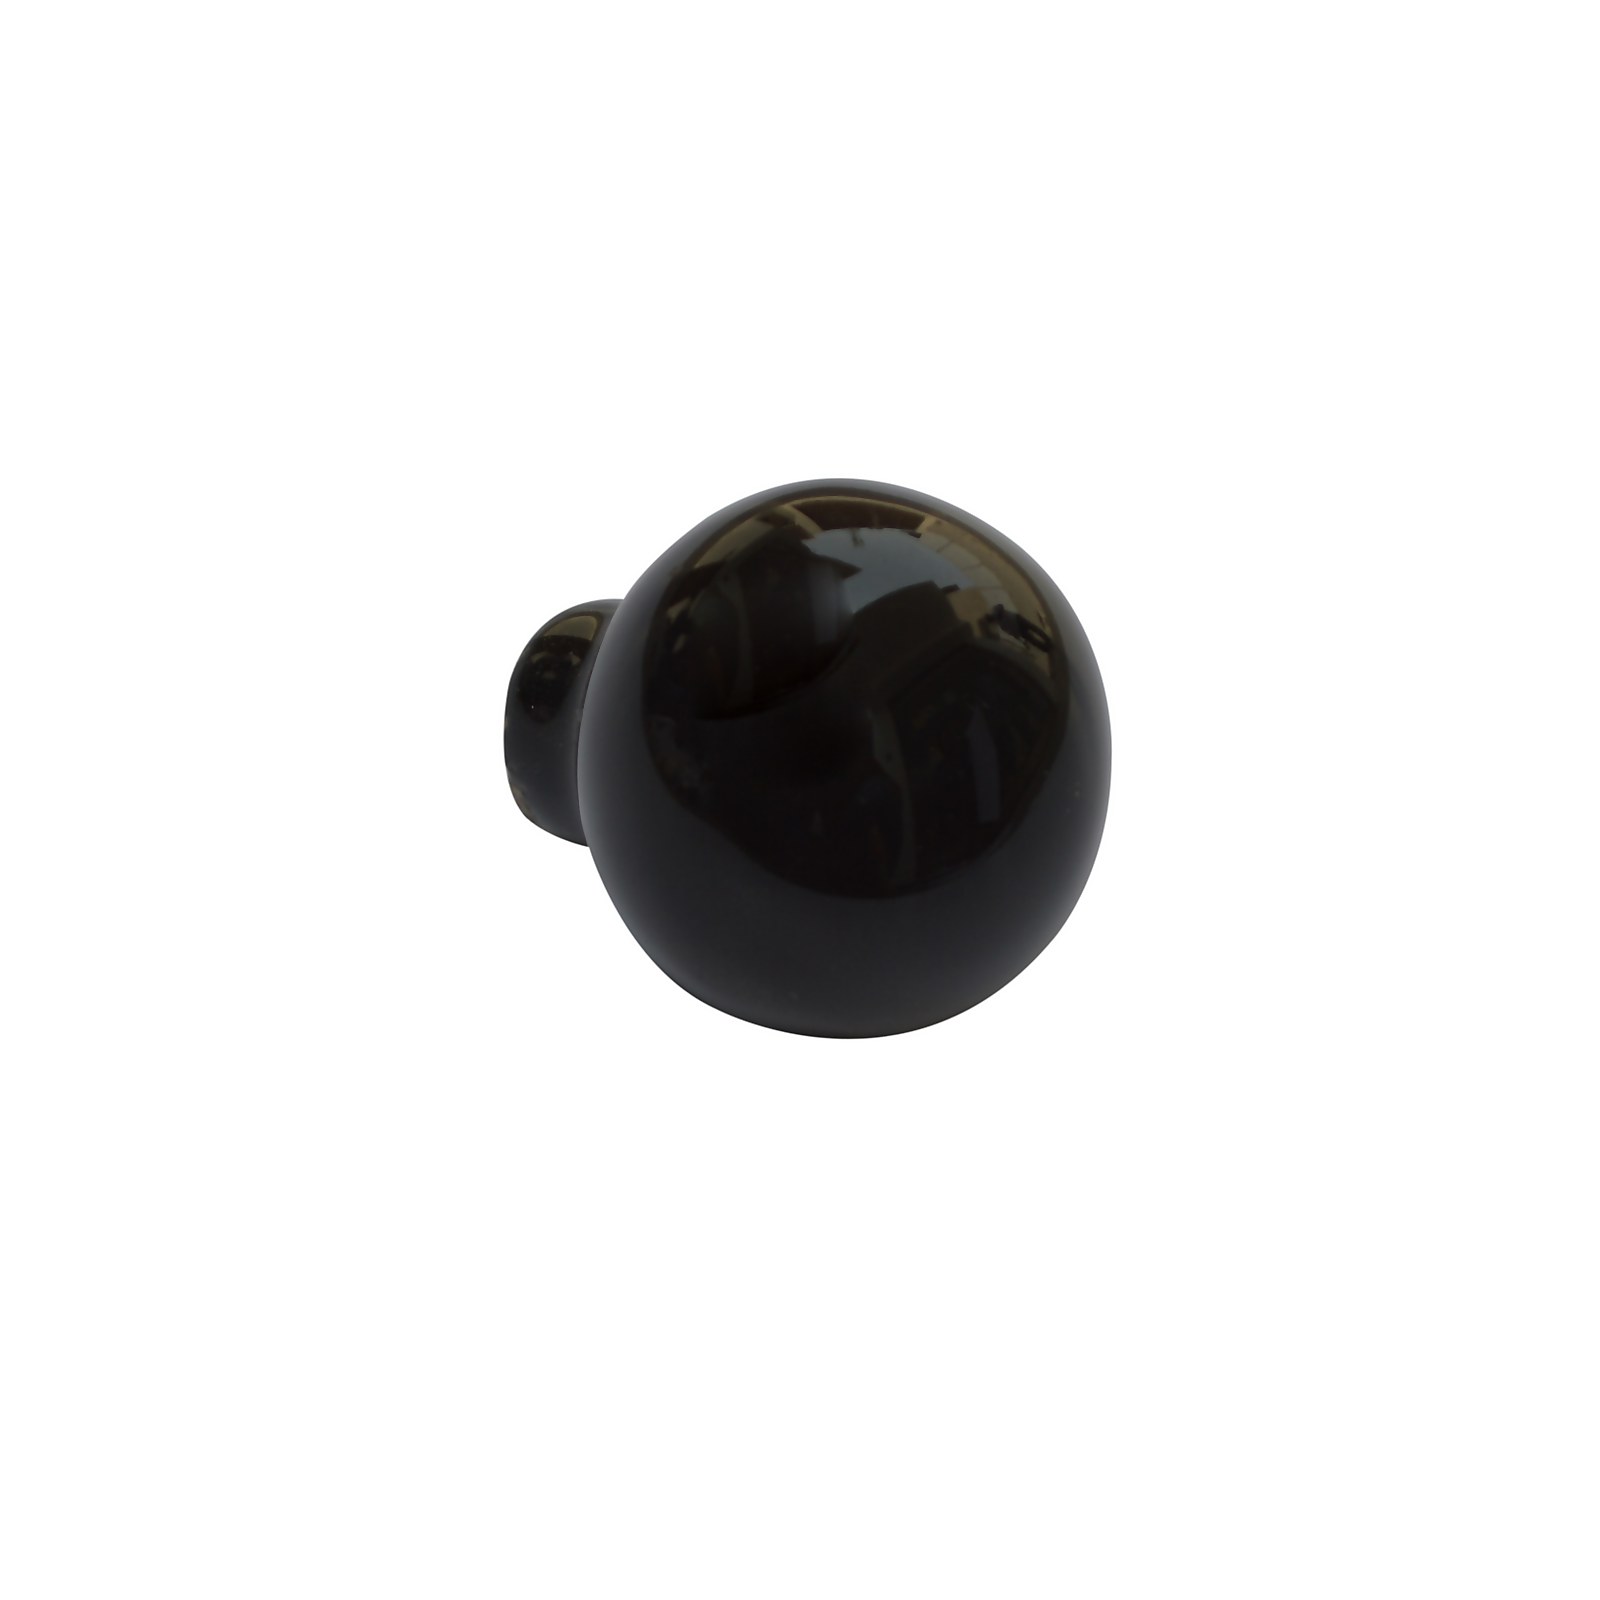 Photo of Arden 35mm Ceramic Black Cabinet Knob - 2 Pack